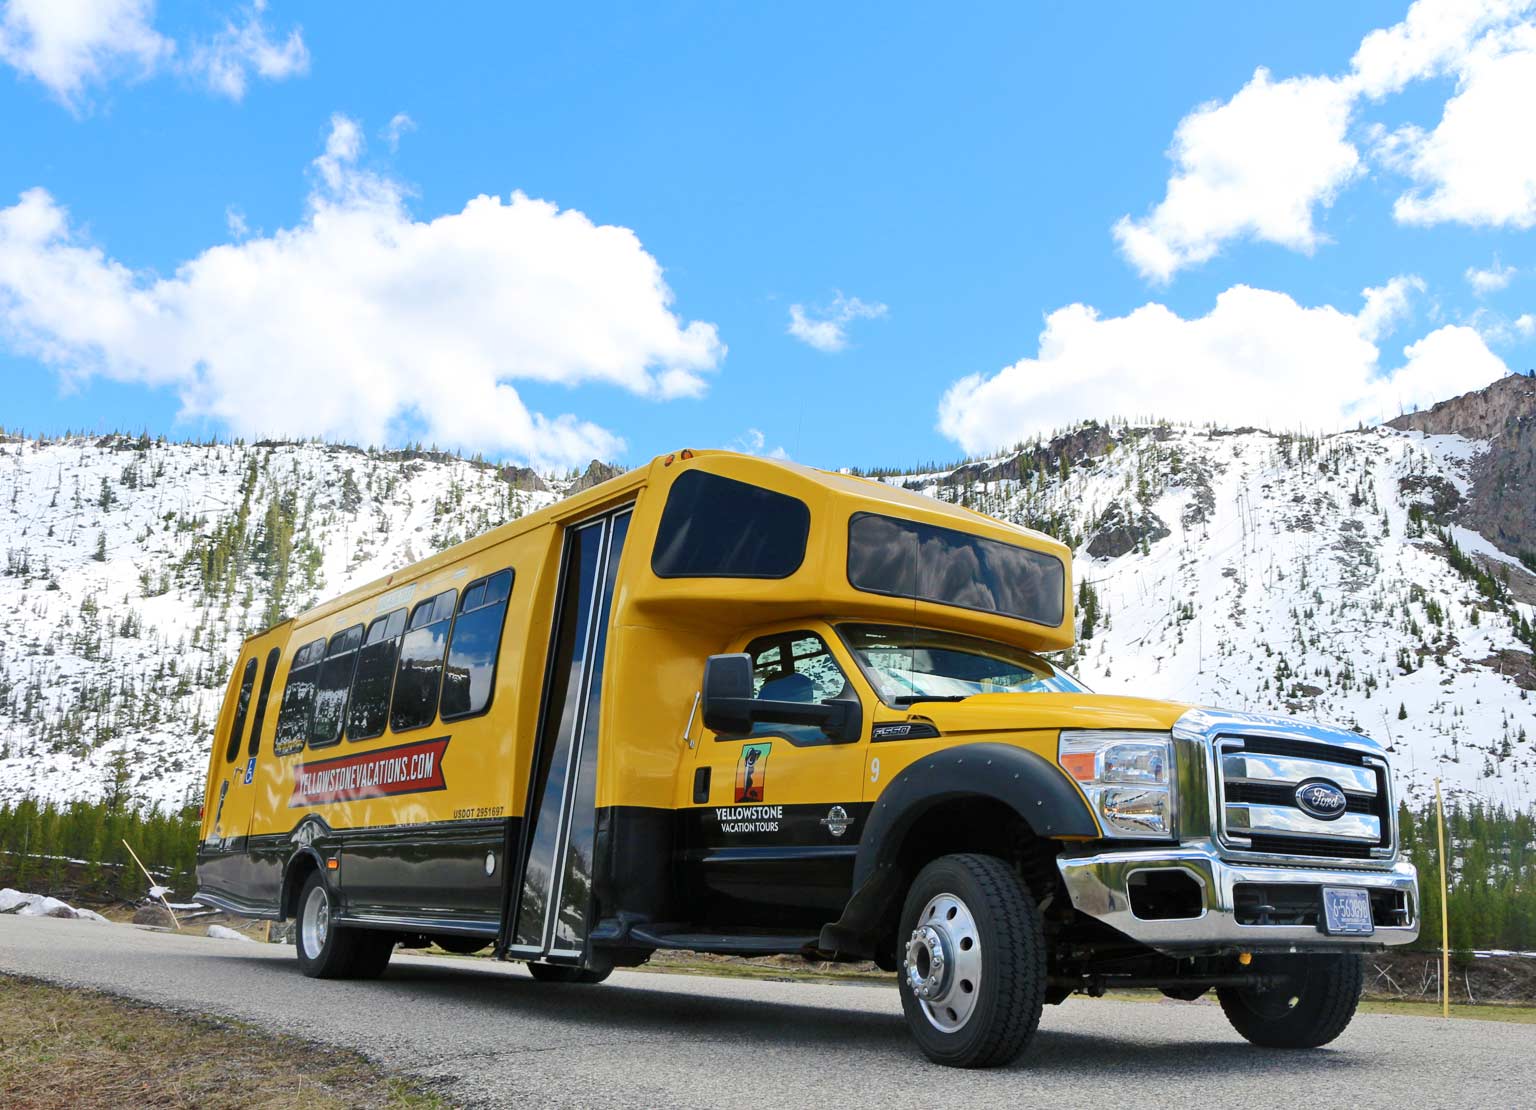 Yellowstone summer bus tours, Yellowstone tours